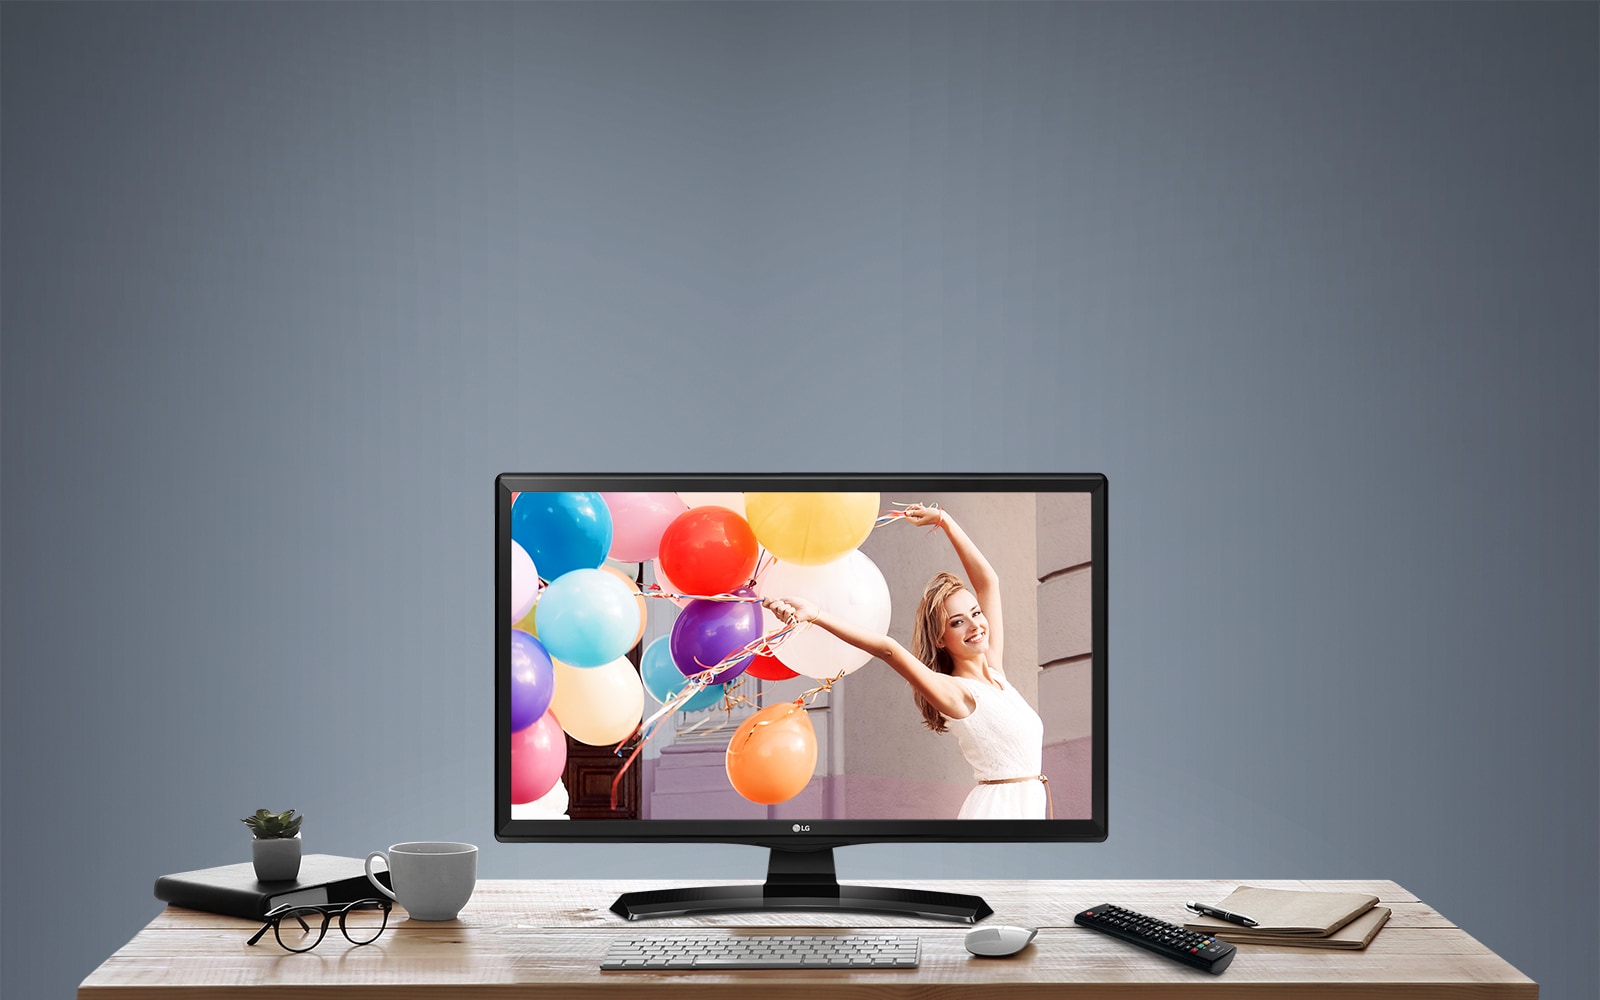 LG Televisión Monitor LED 24MT49S-PU 24 Pulgadas HD Smart TV-Negro